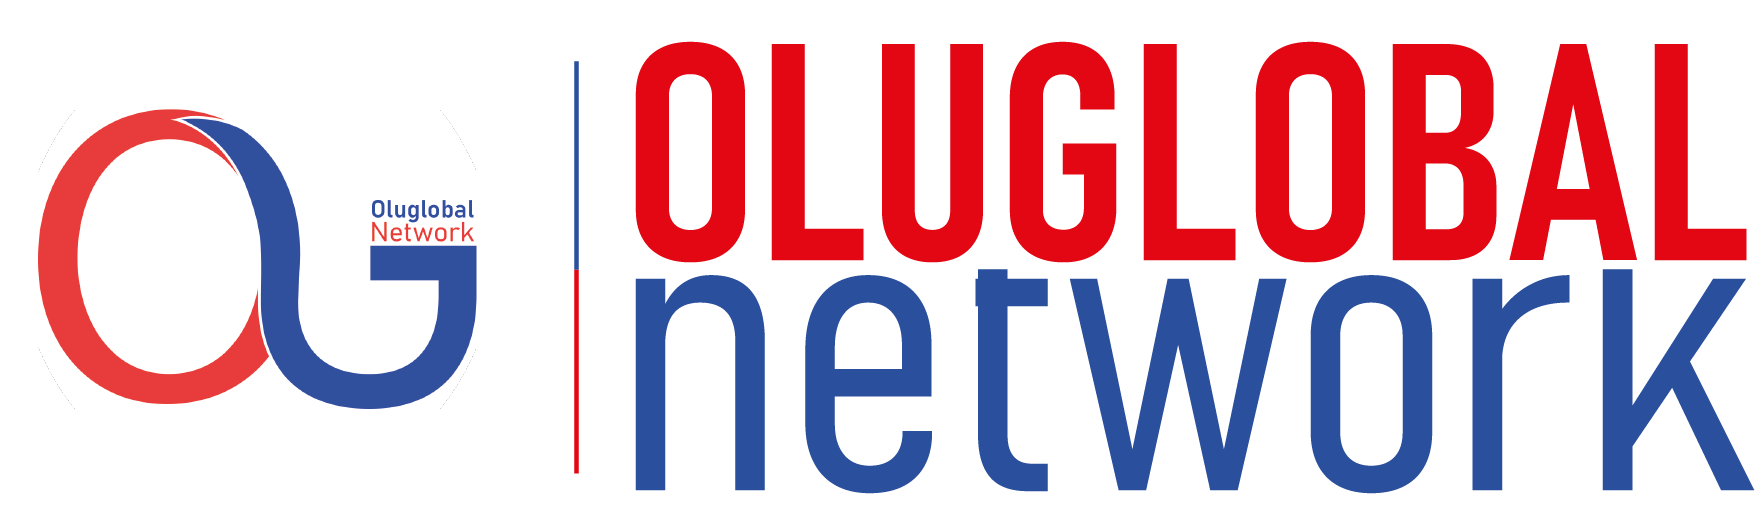 Oluglobal Network